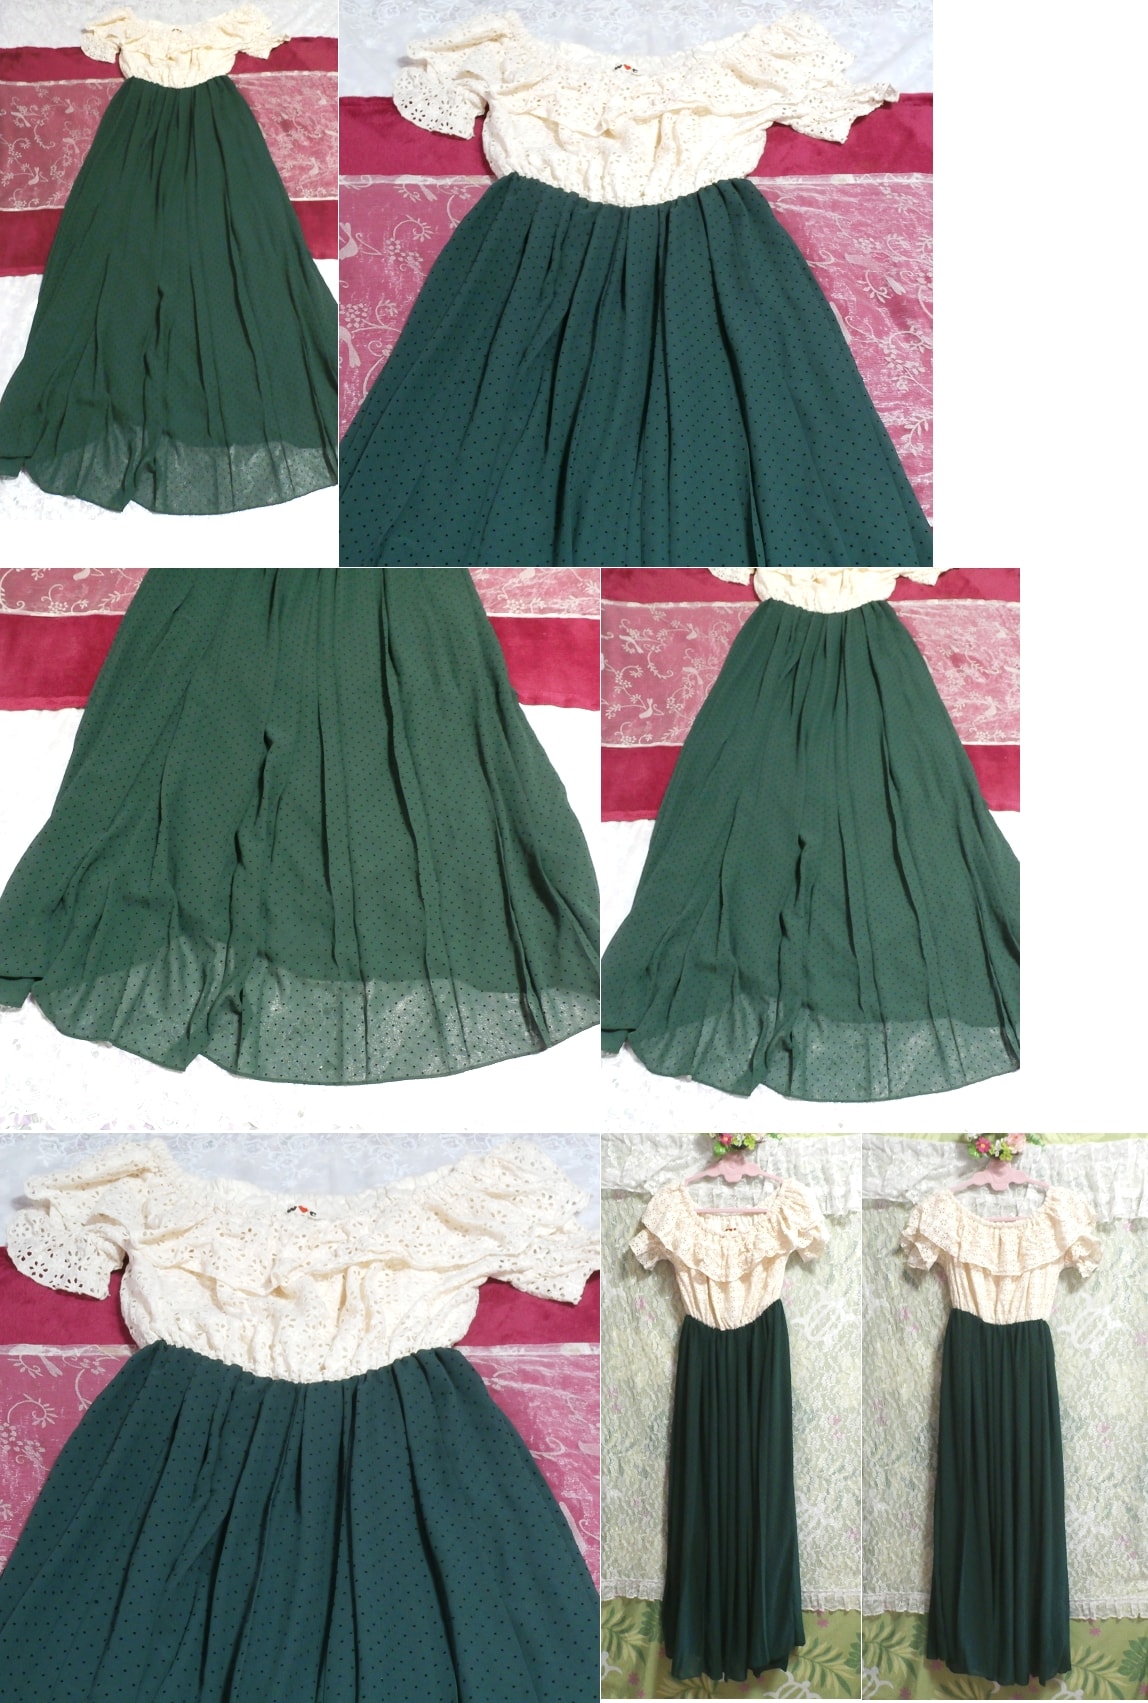 White floral white lace negligee nightgown maxi dress green chiffon skirt dress, long skirt, m size